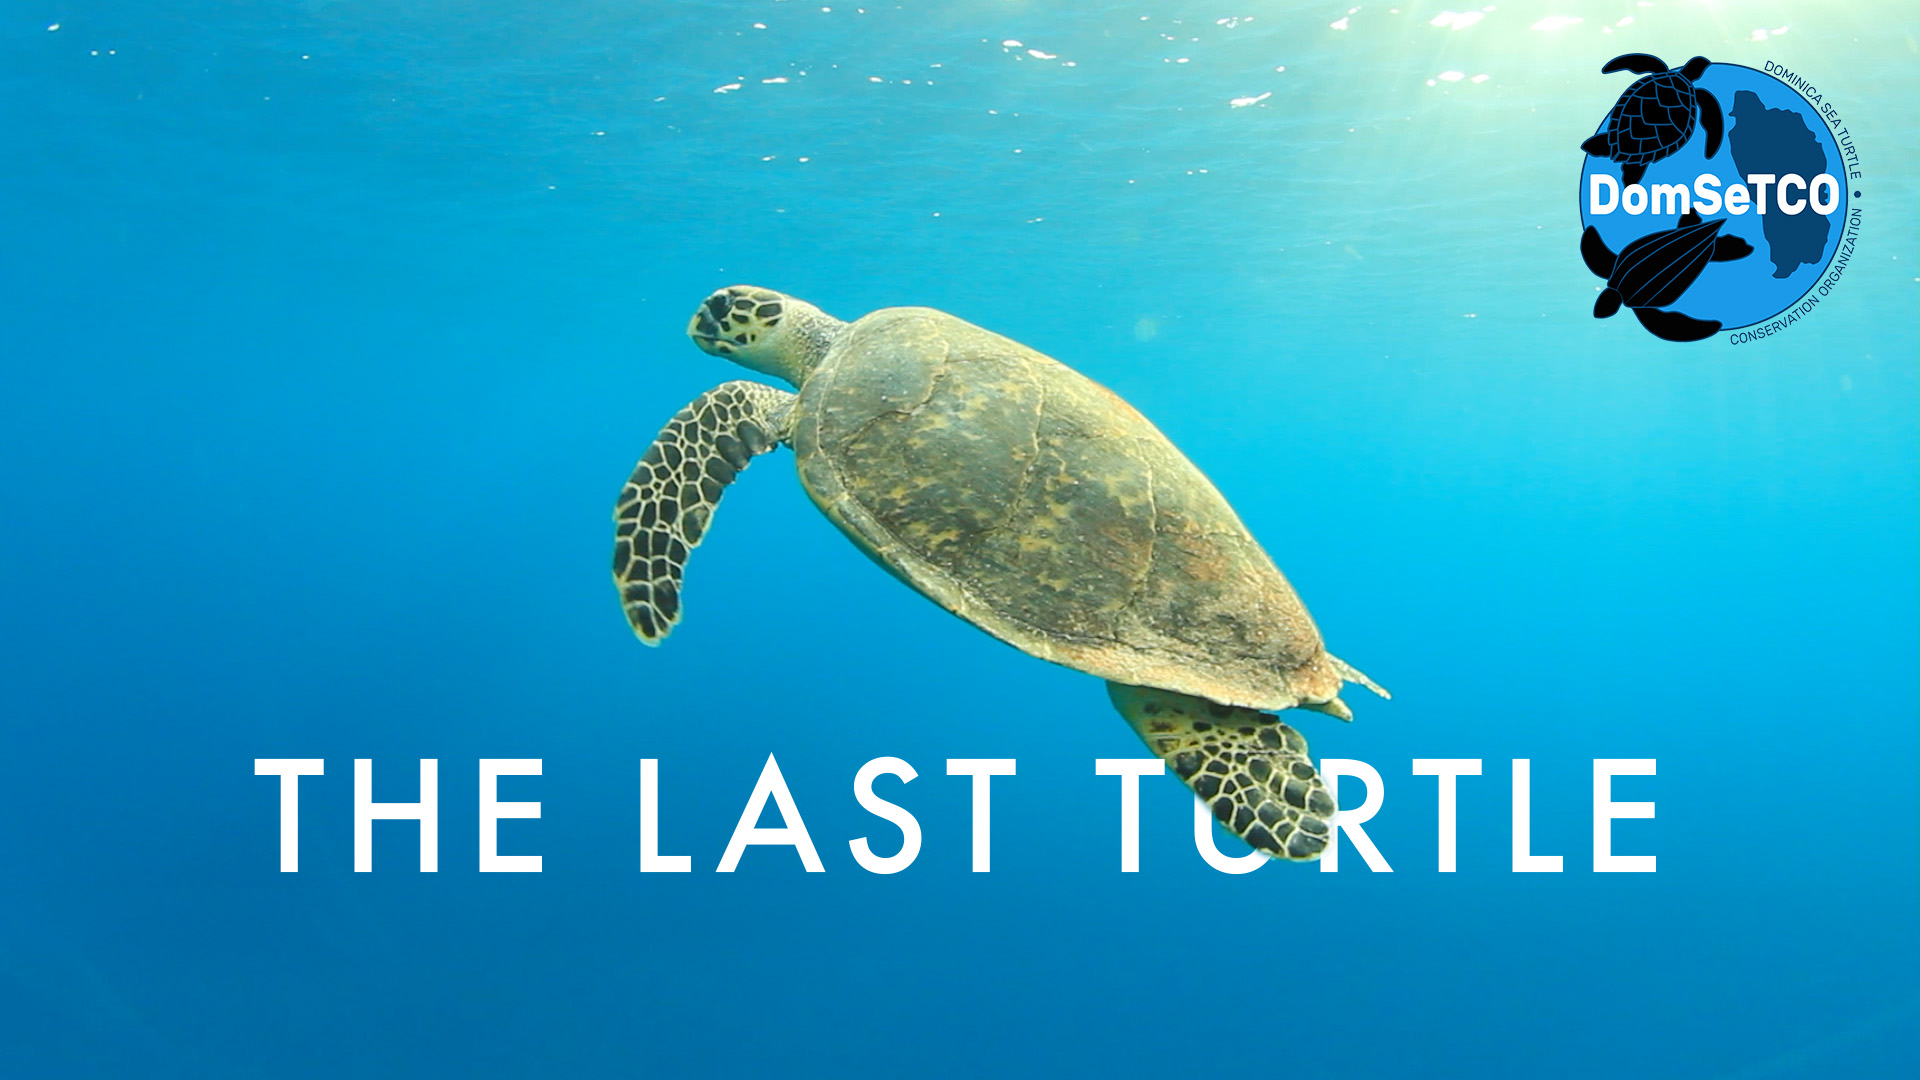 Last turtle. Hurricane Turtle Echoes. Destination - Hurricane Turtle.